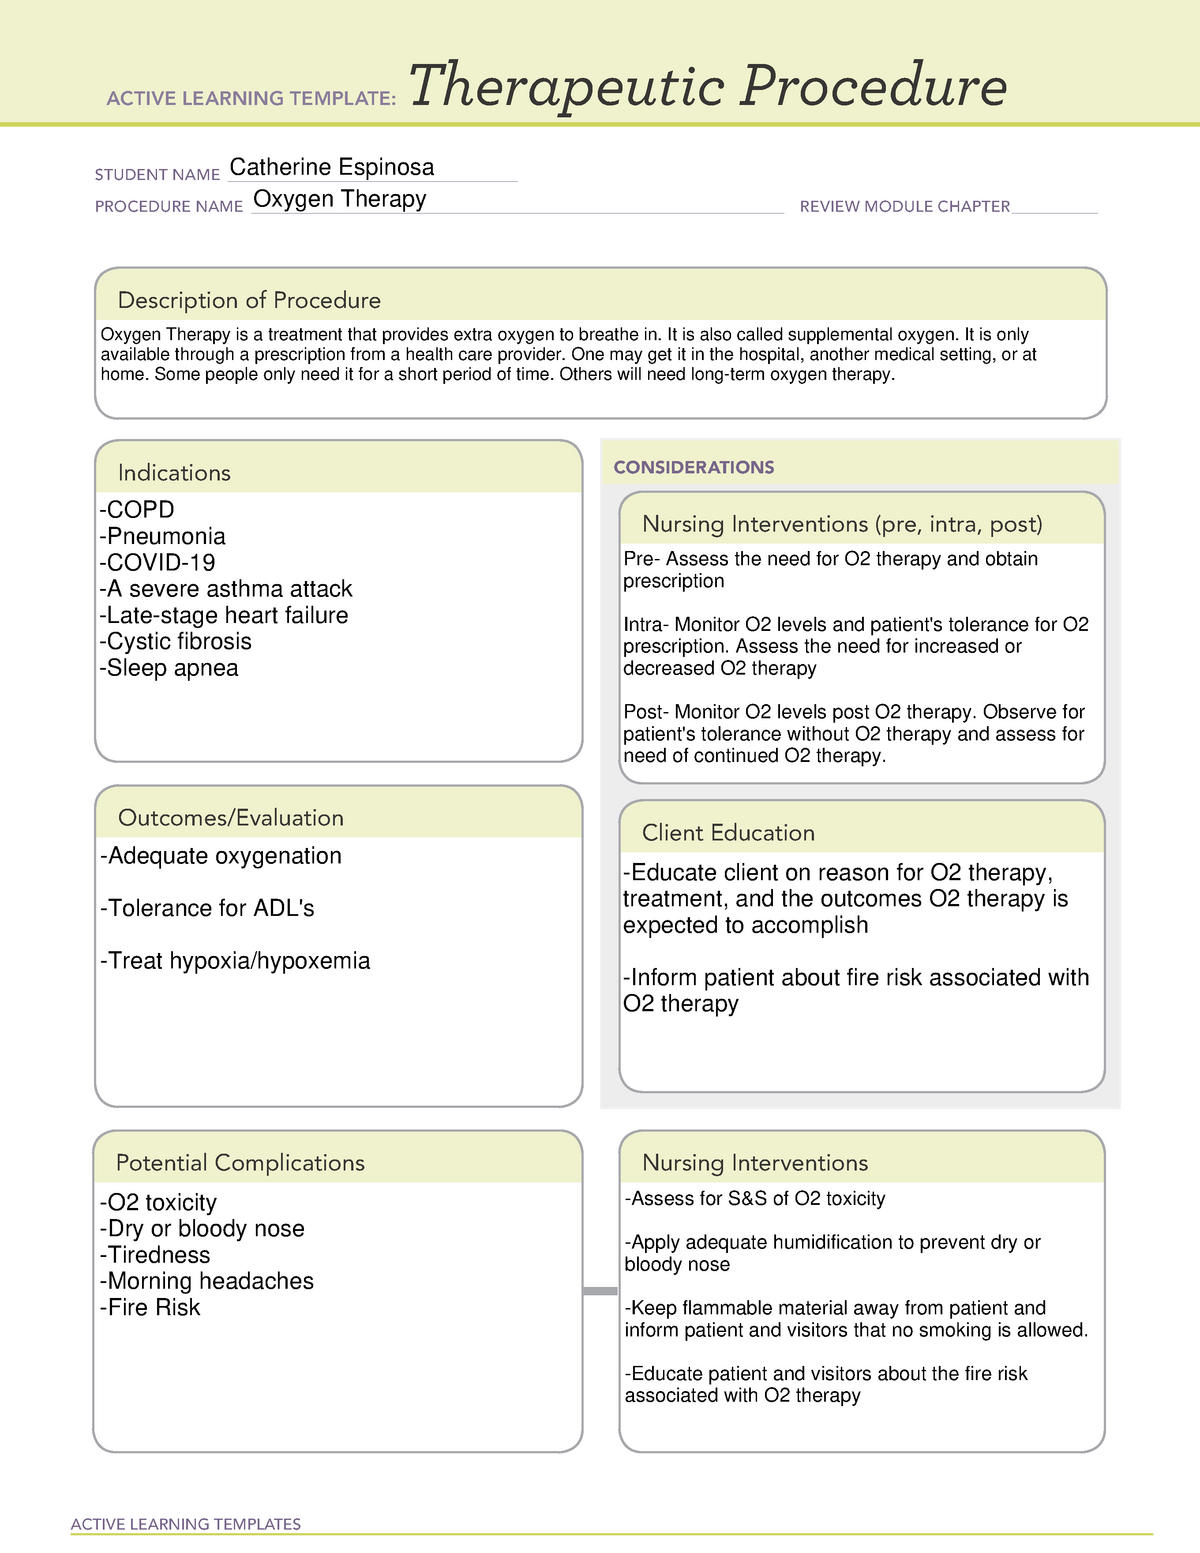 ati-therapeutic-procedure-template-indications-nursing-interventions